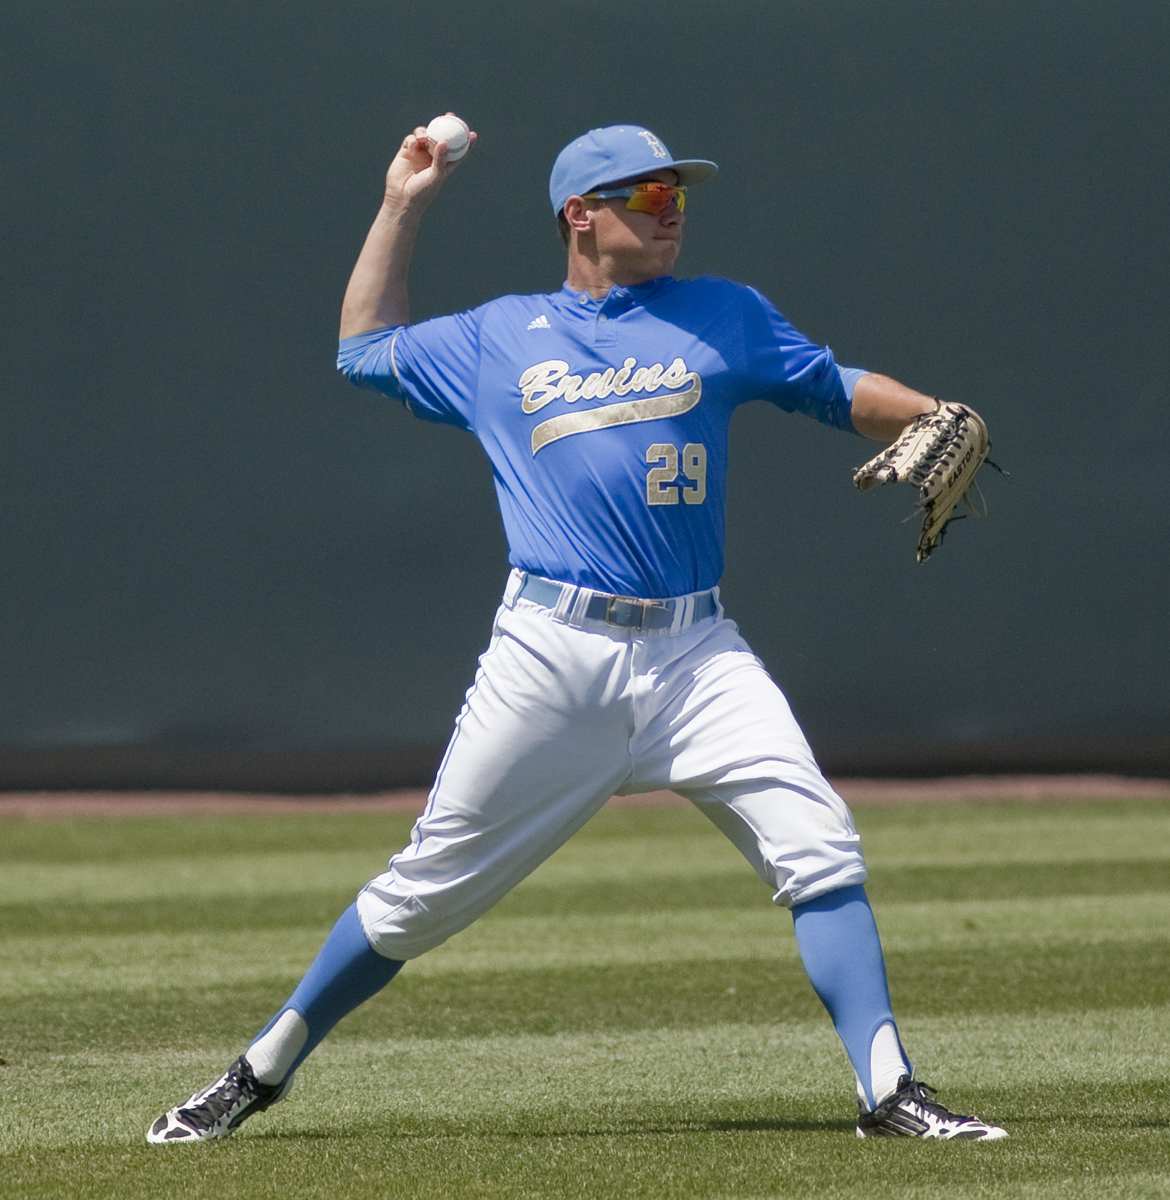 Check Out Oregon Baseball's New Uniforms